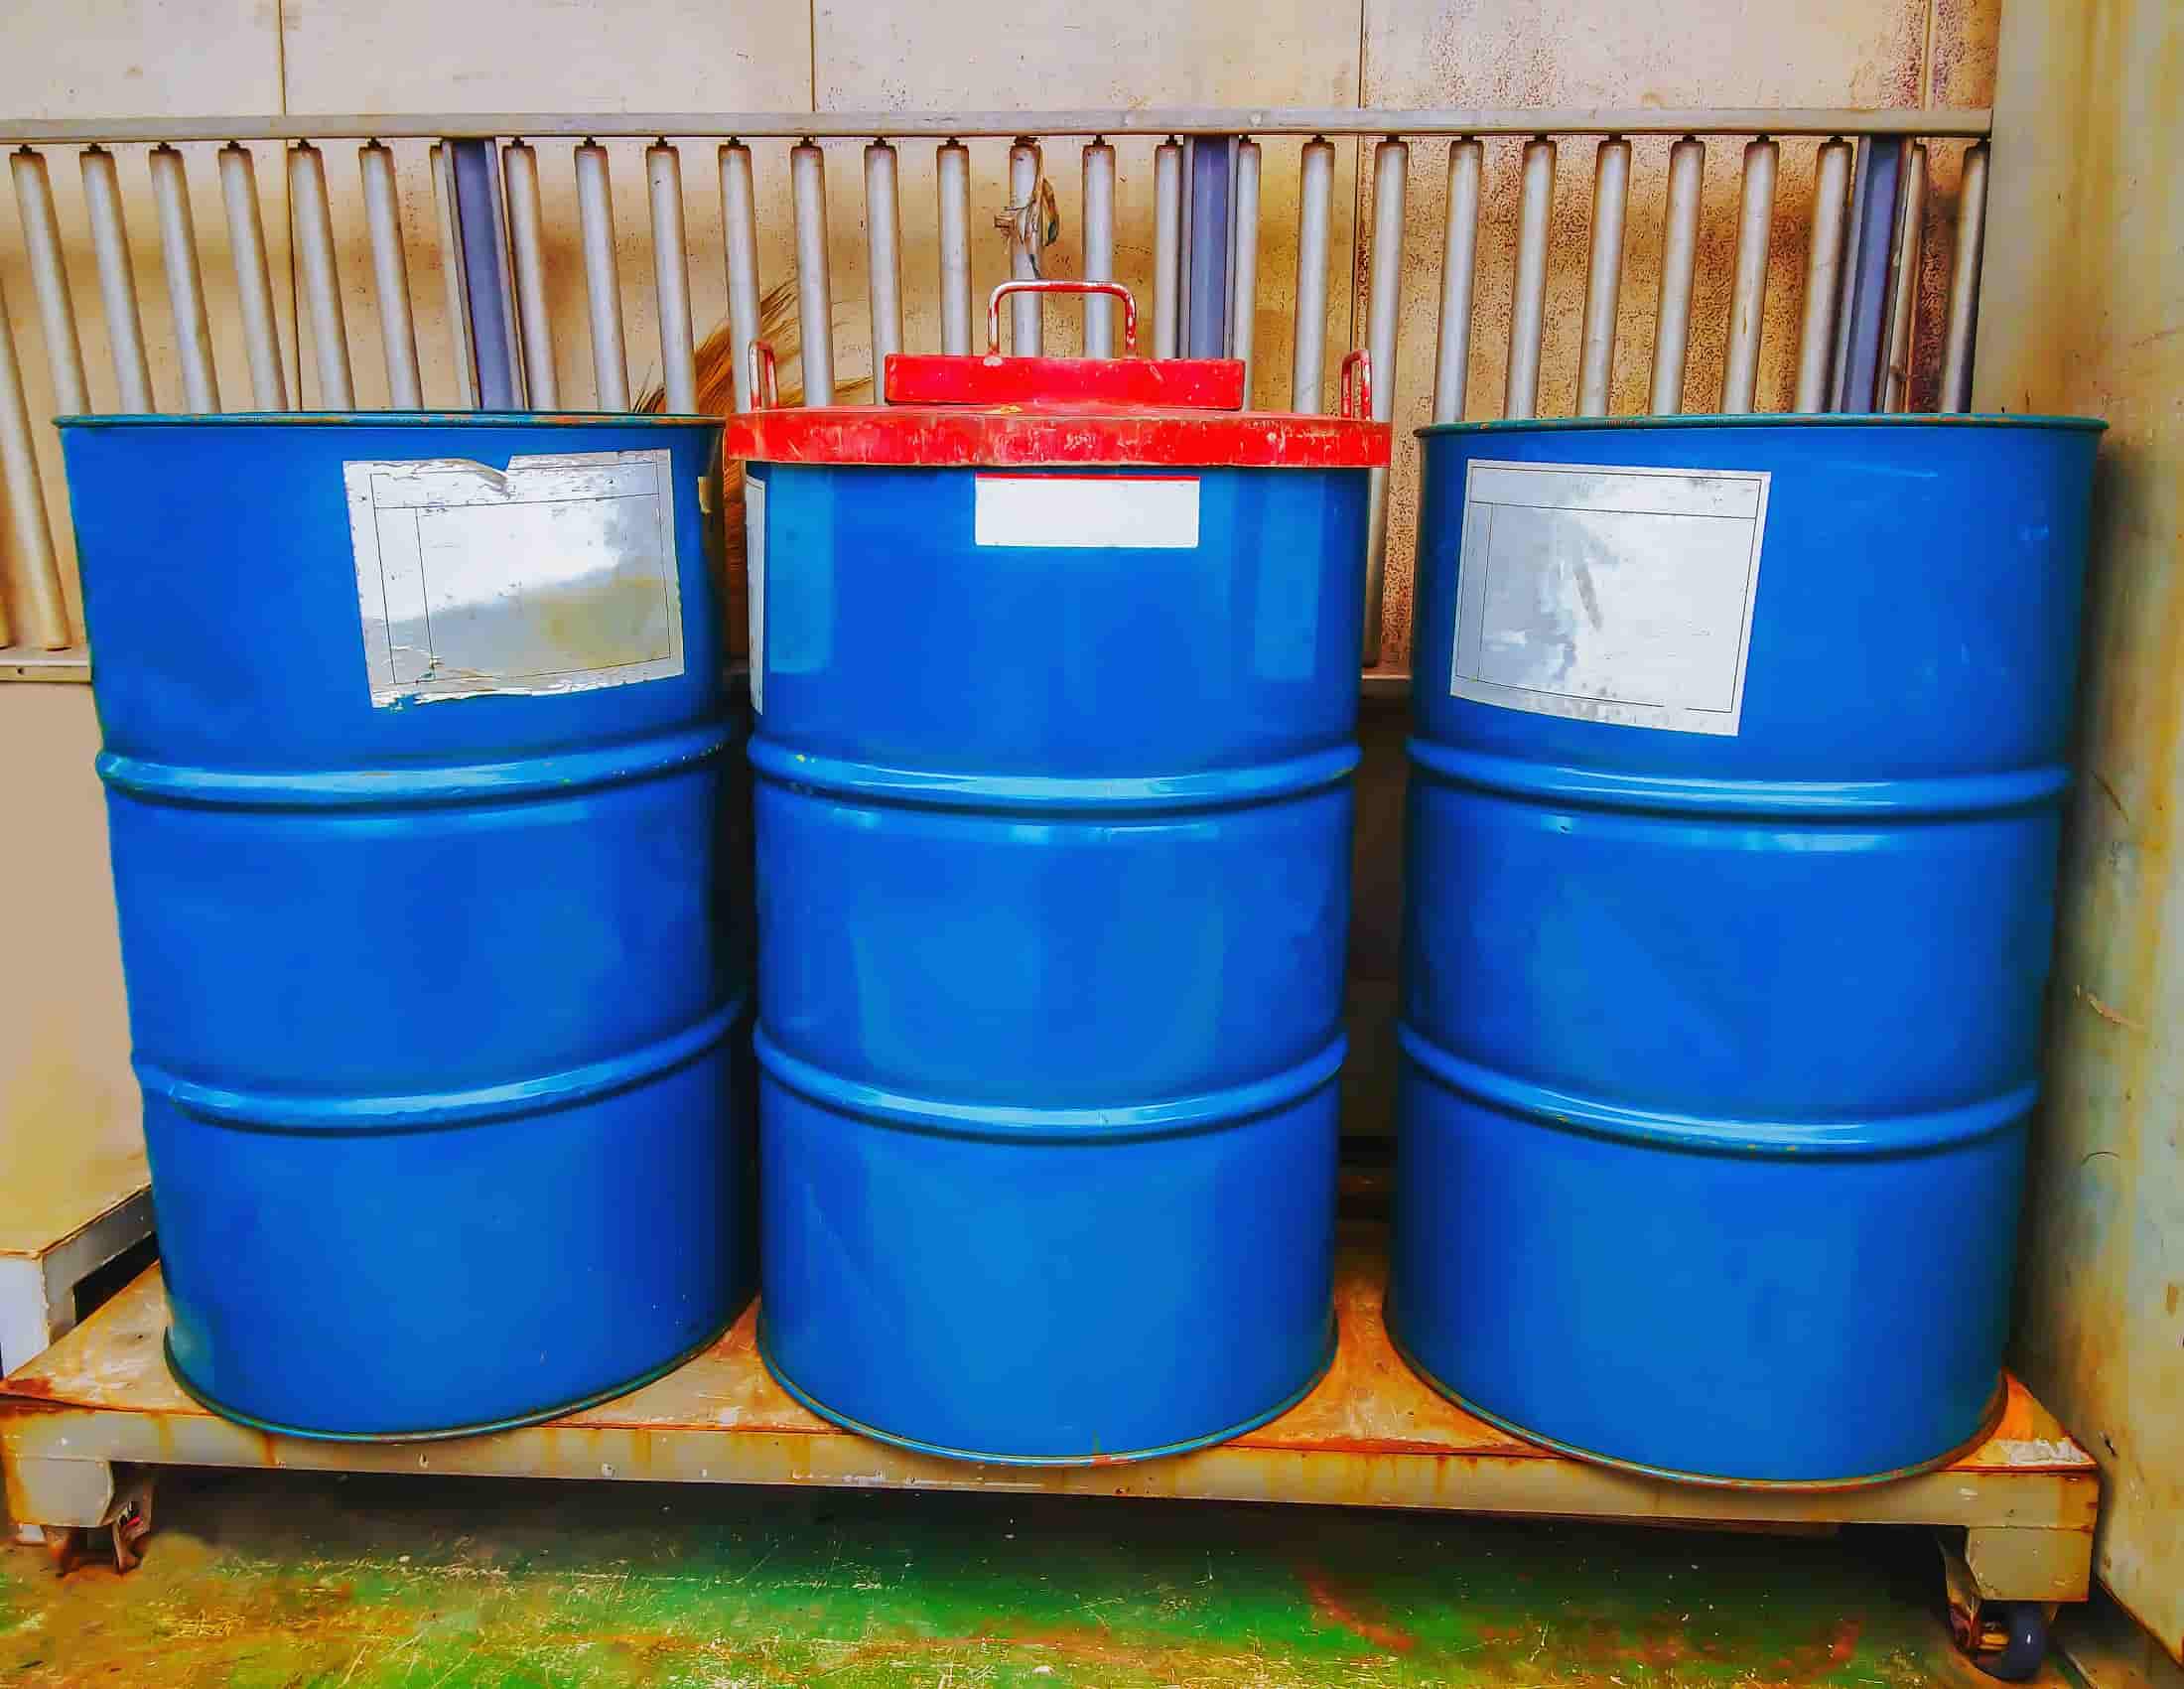 250 L Flammable Liquids Cabinet Sitecraft Materials Handling Melbourne Sydney Brisbane Australia Material Handling Equipment Storage Dangerous Goods